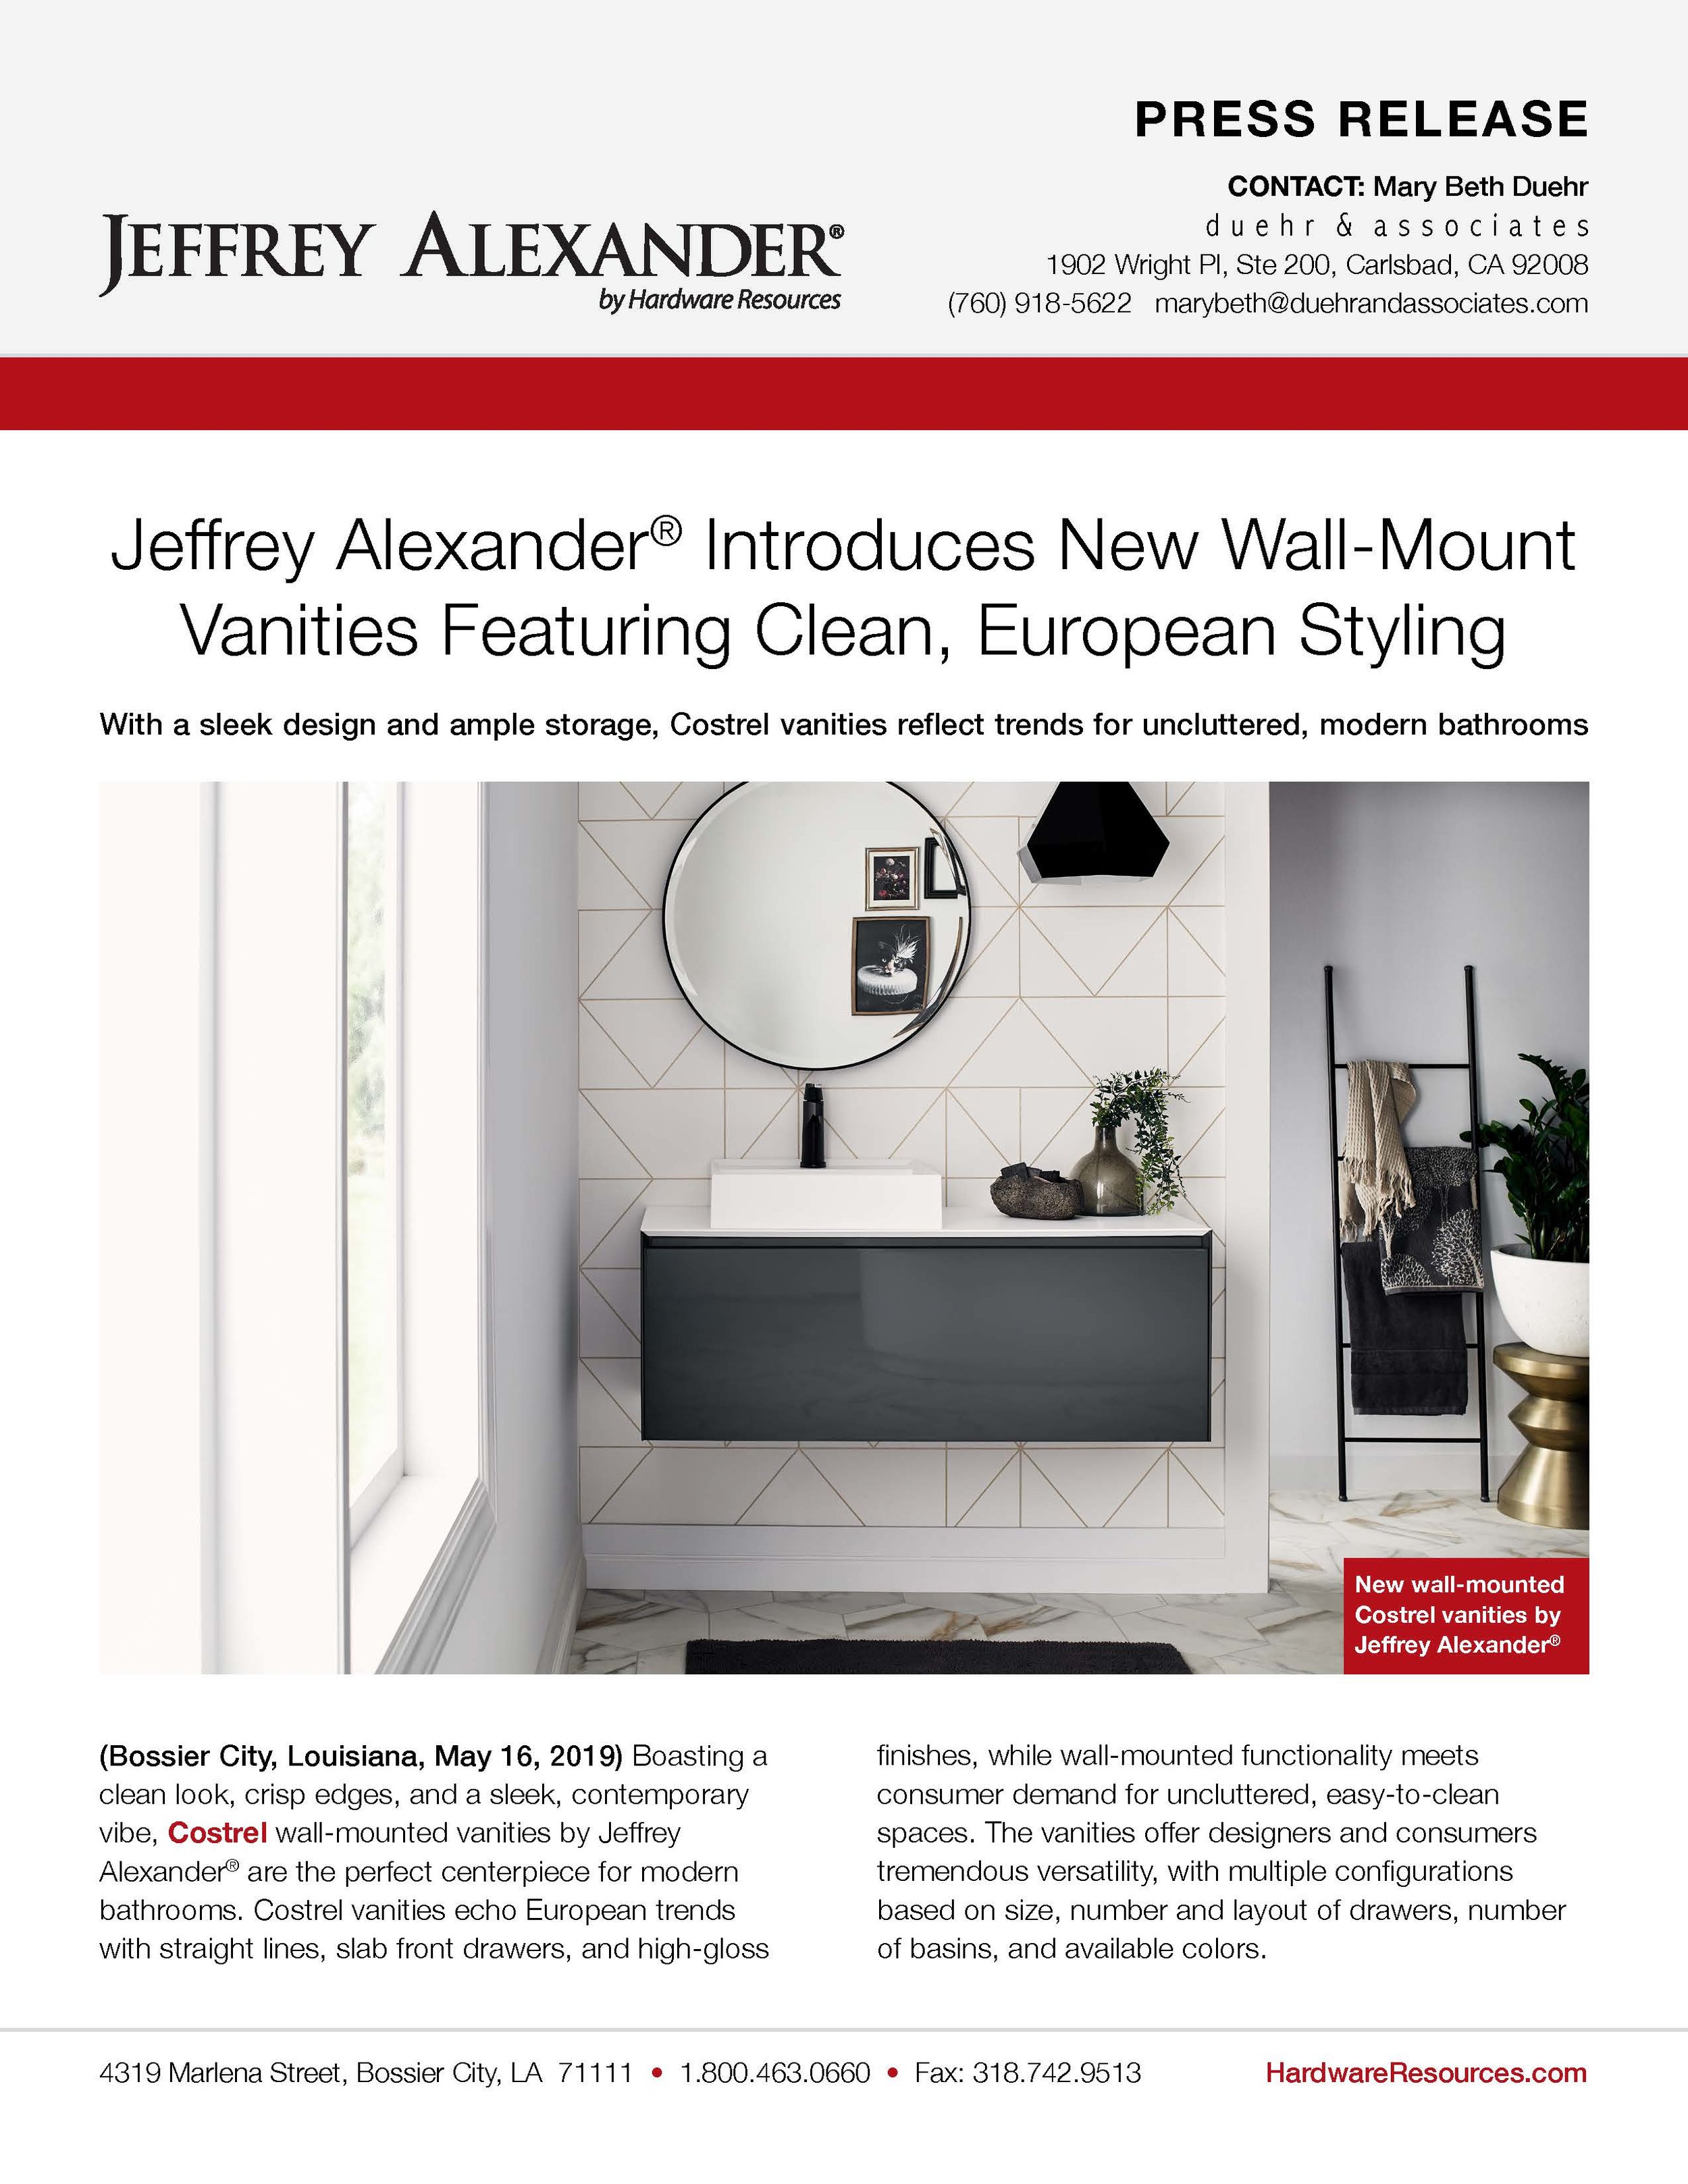 Jeffrey Alexander Press Release